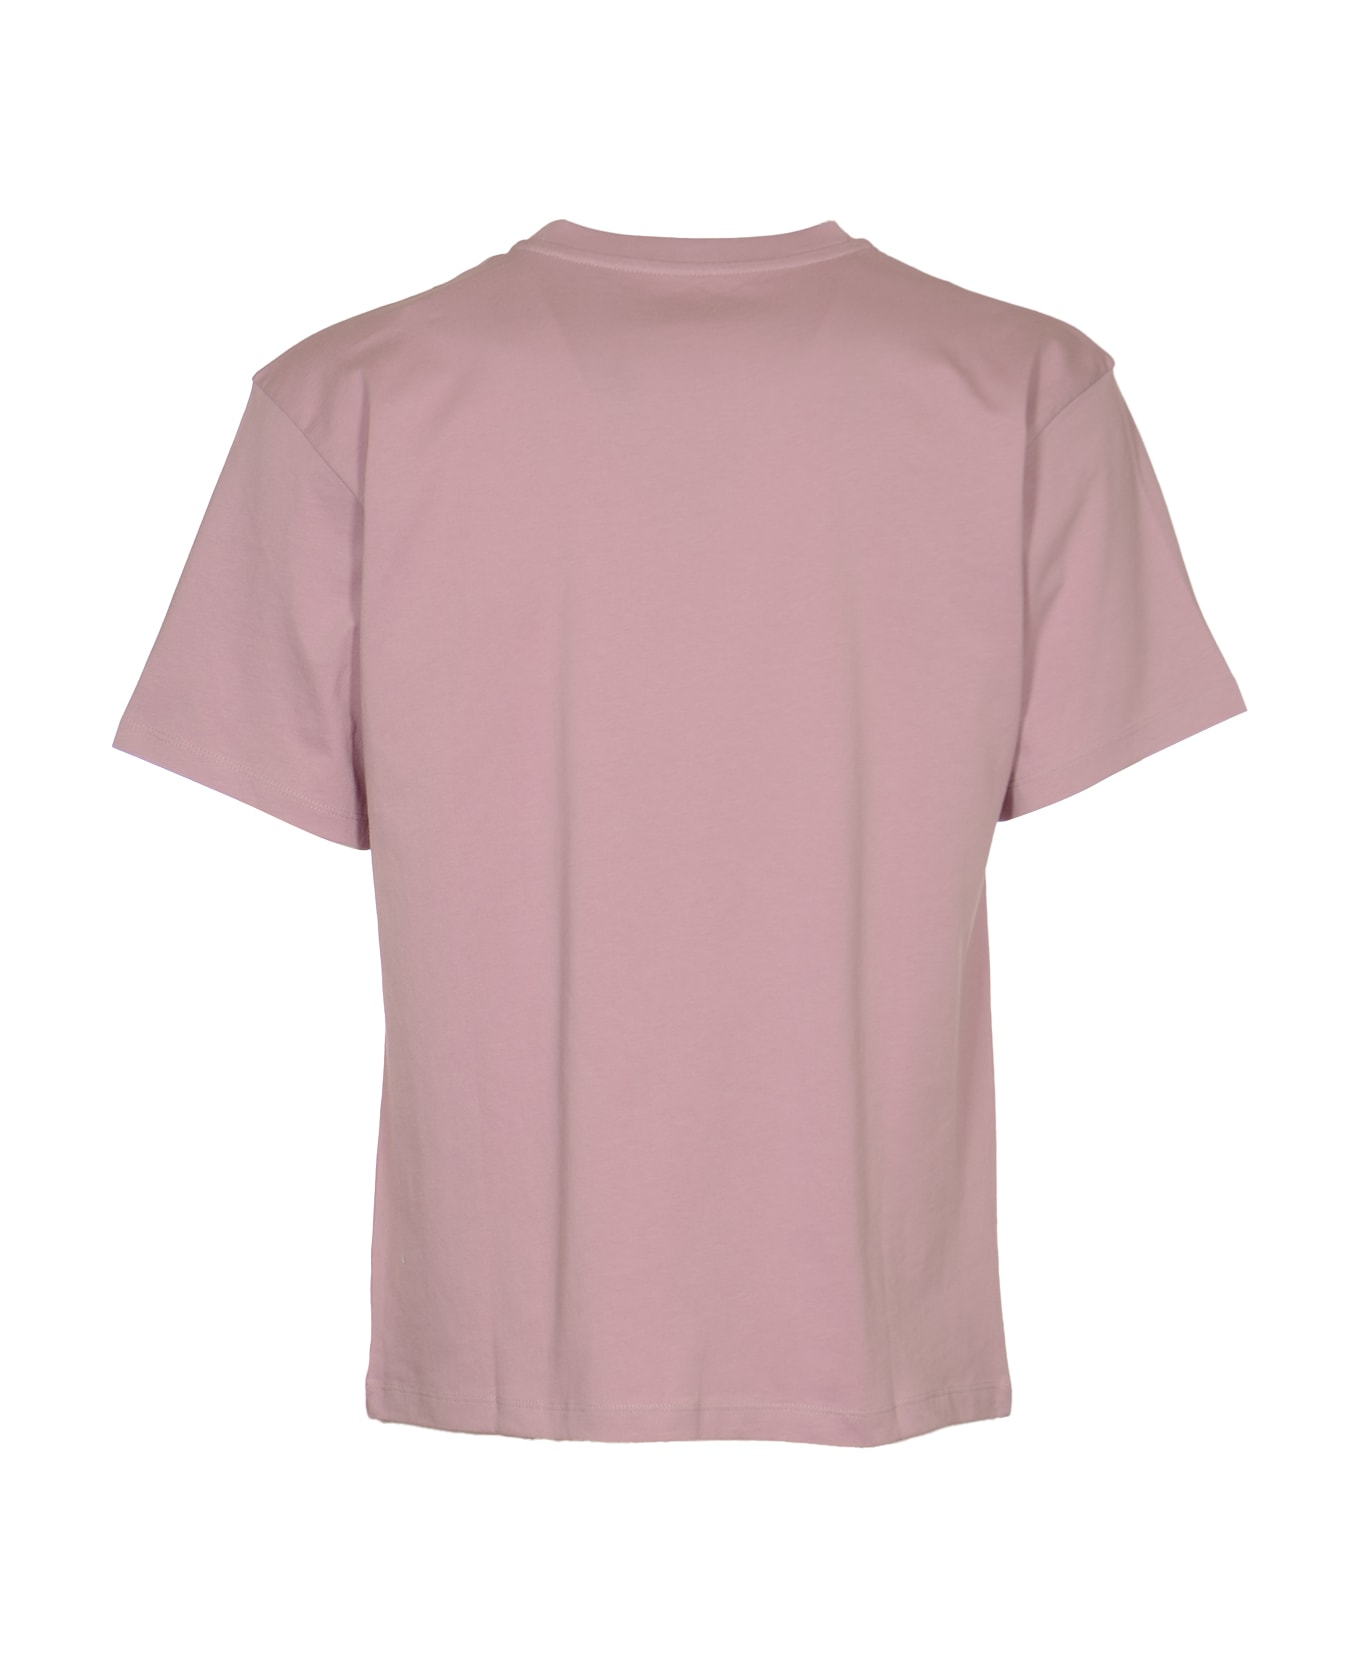 PACCBET Logo Print Round Neck T-shirt - Pink